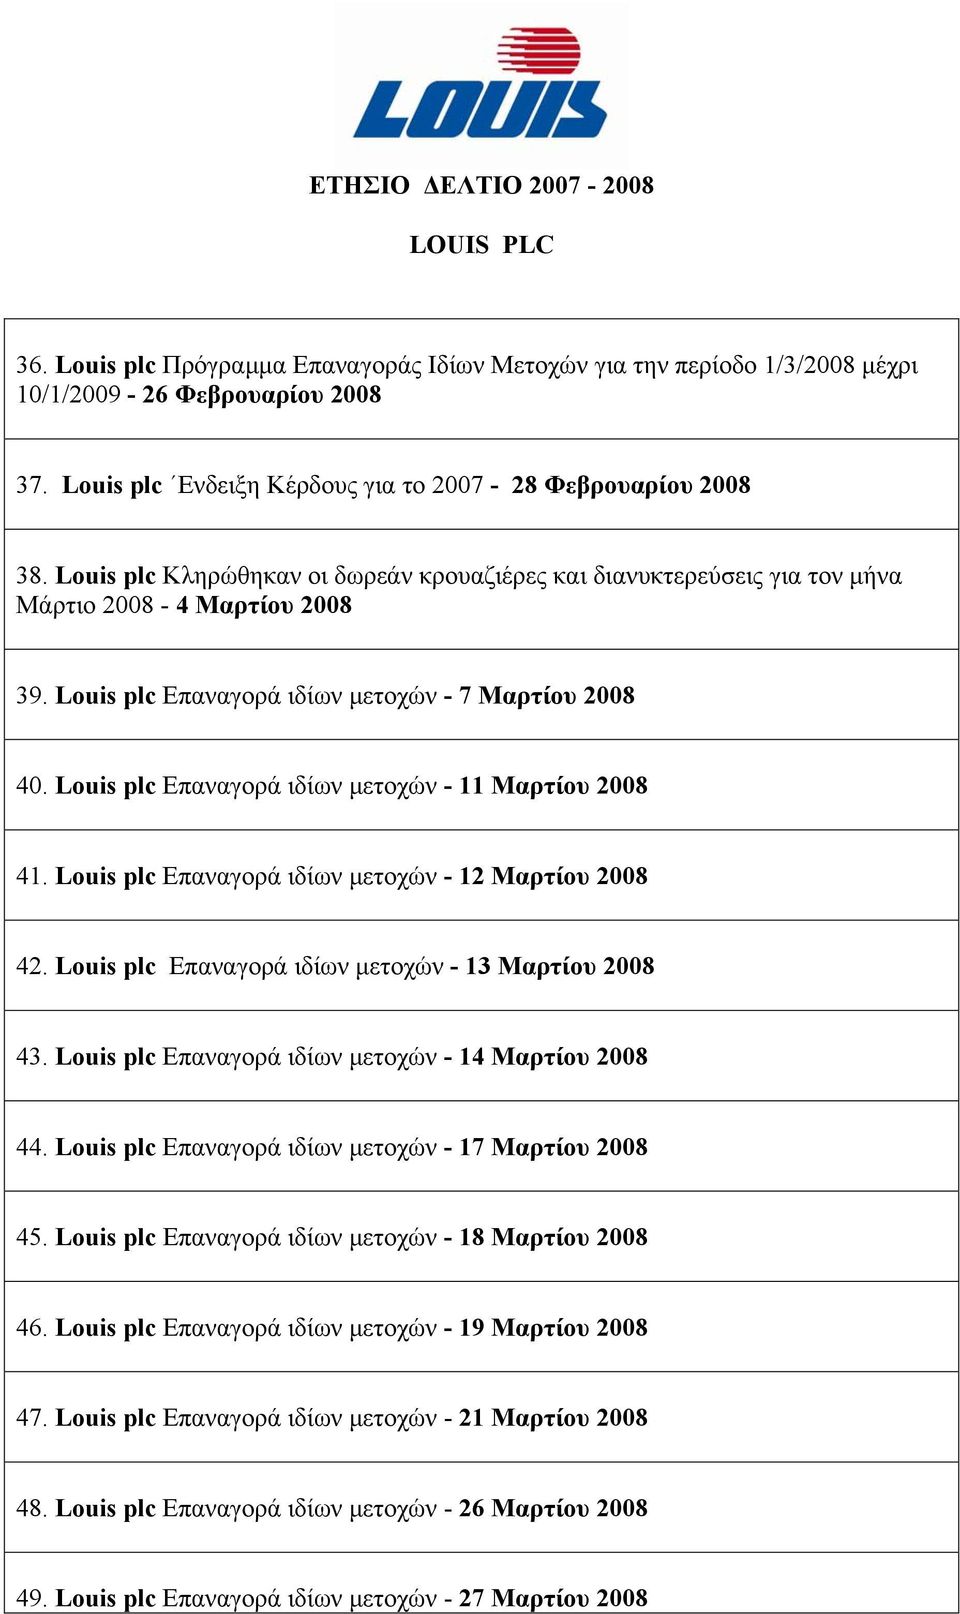 Louis plc Επαναγορά ιδίων μετοχών - 11 Μαρτίου 2008 41. Louis plc Επαναγορά ιδίων μετοχών - 12 Μαρτίου 2008 42. Louis plc Επαναγορά ιδίων μετοχών - 13 Μαρτίου 2008 43.